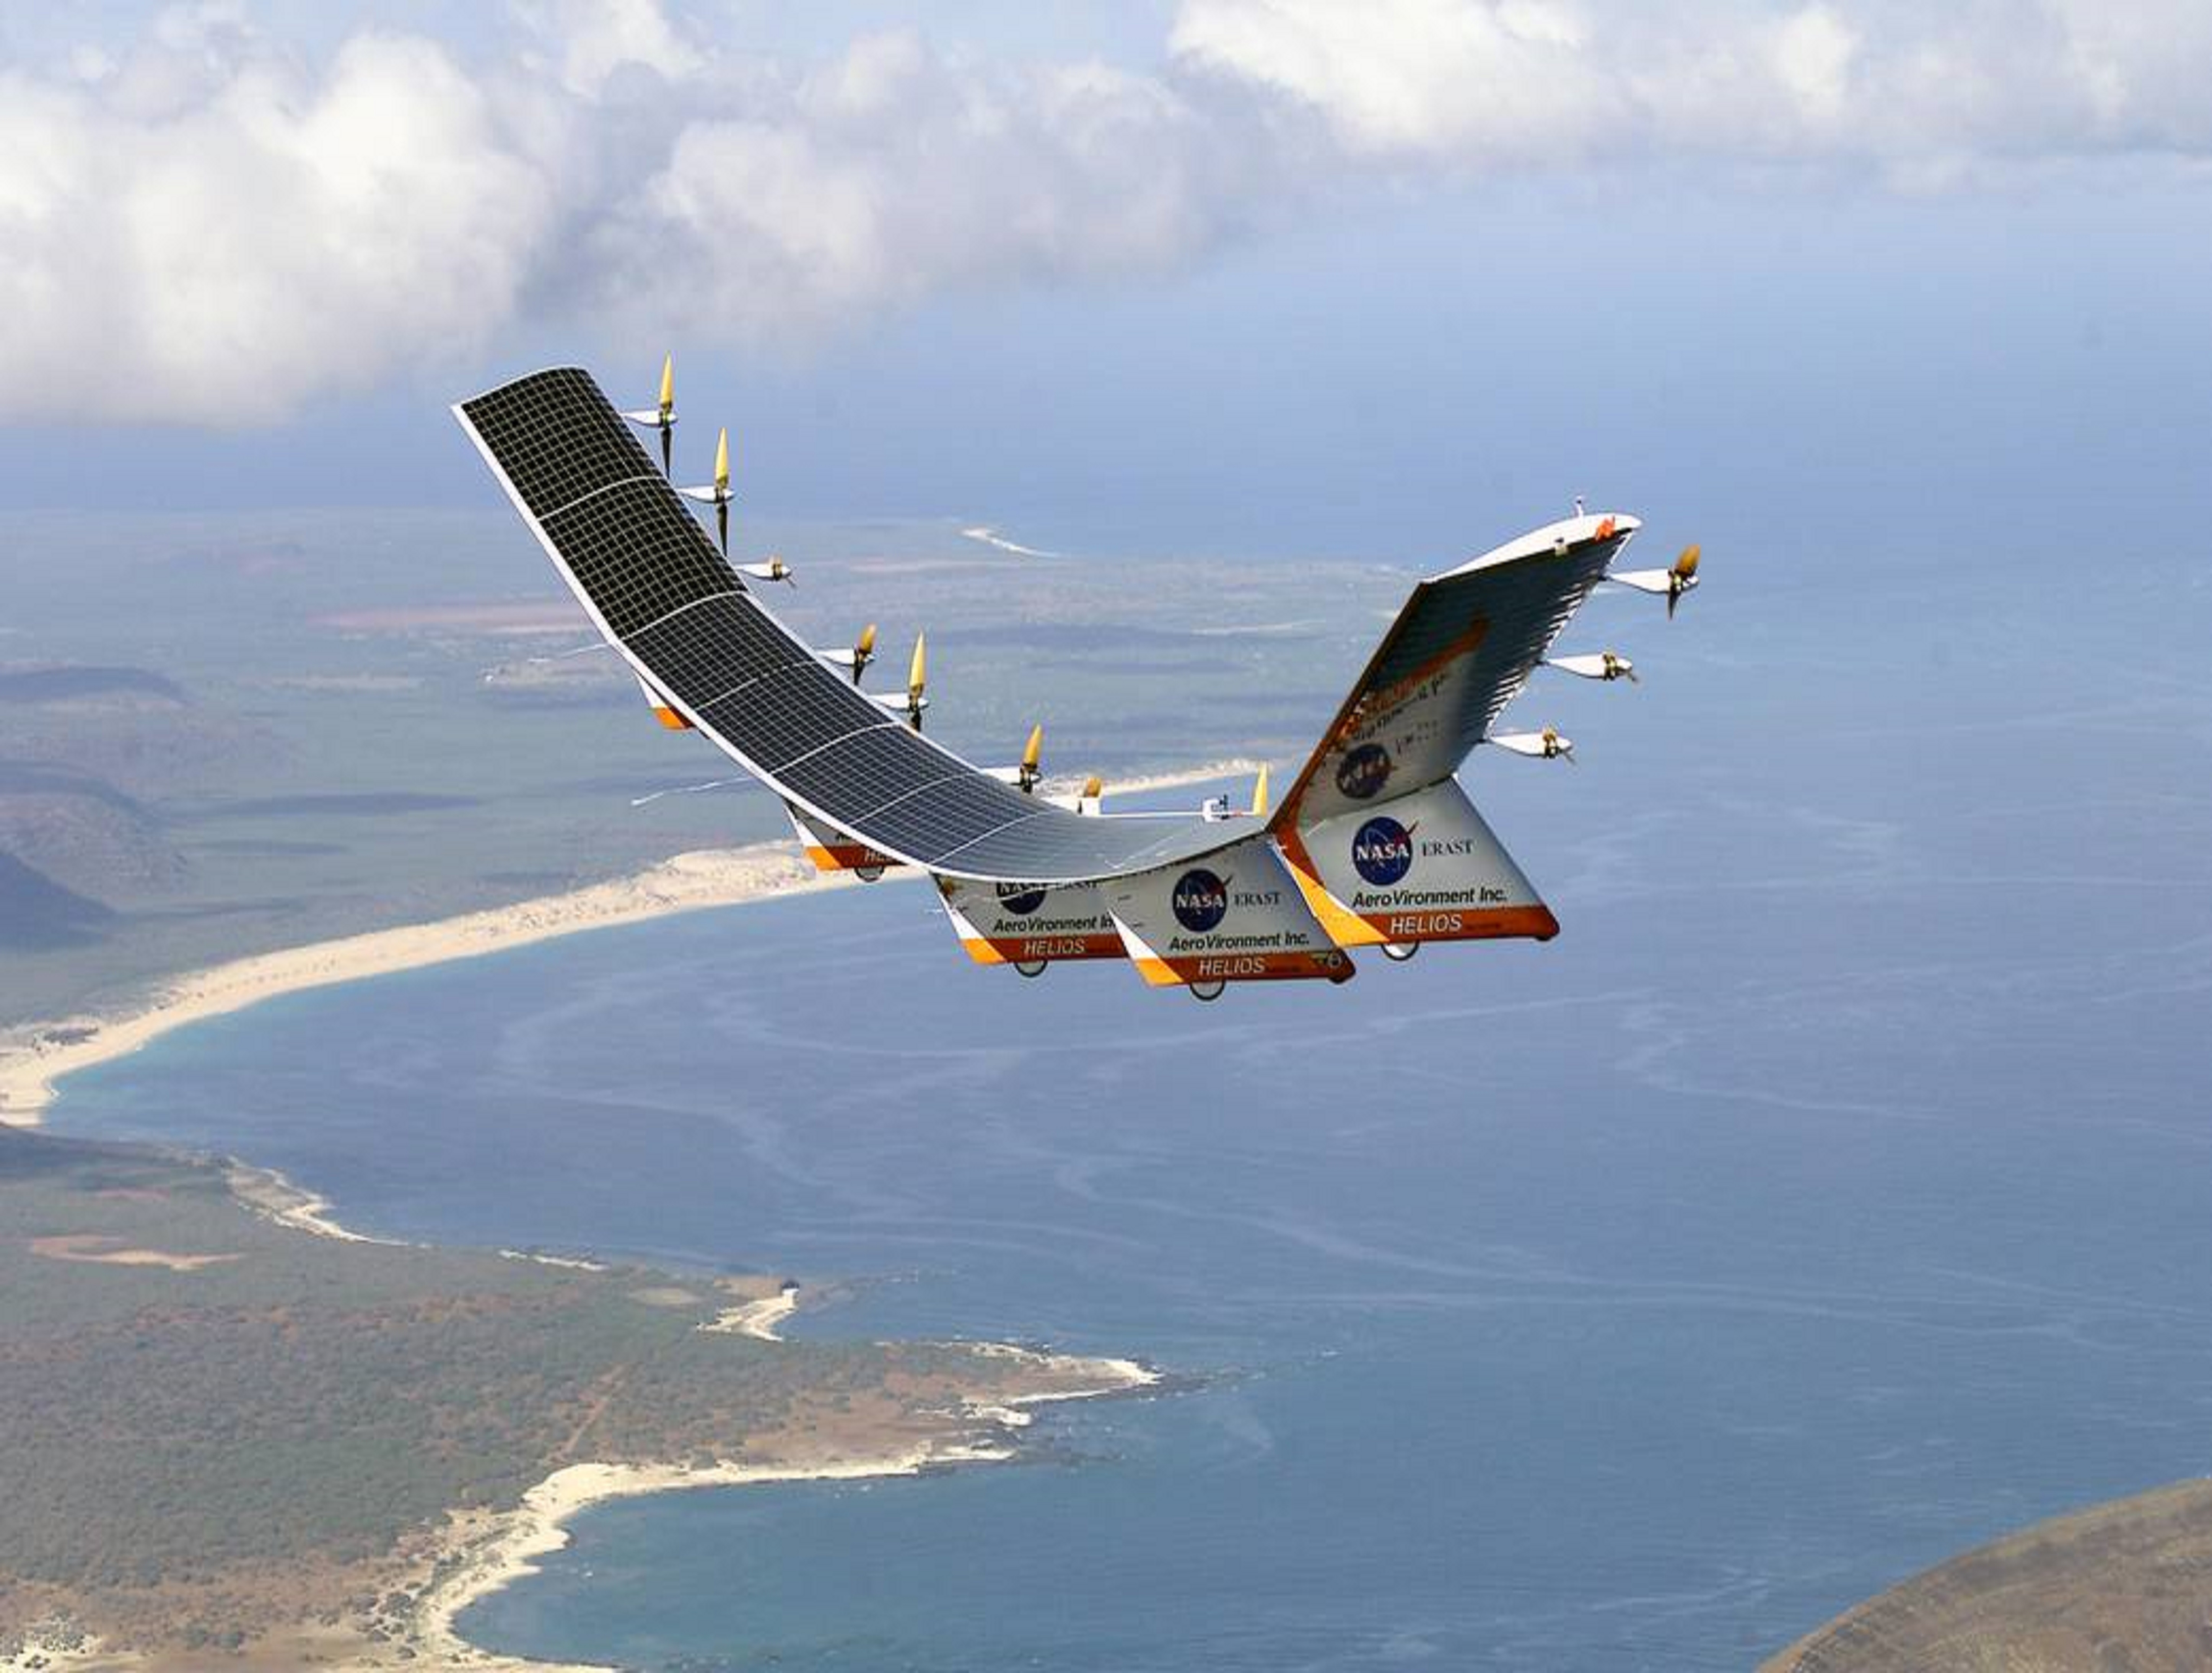 NASA Helios Solar Powered Aircraft